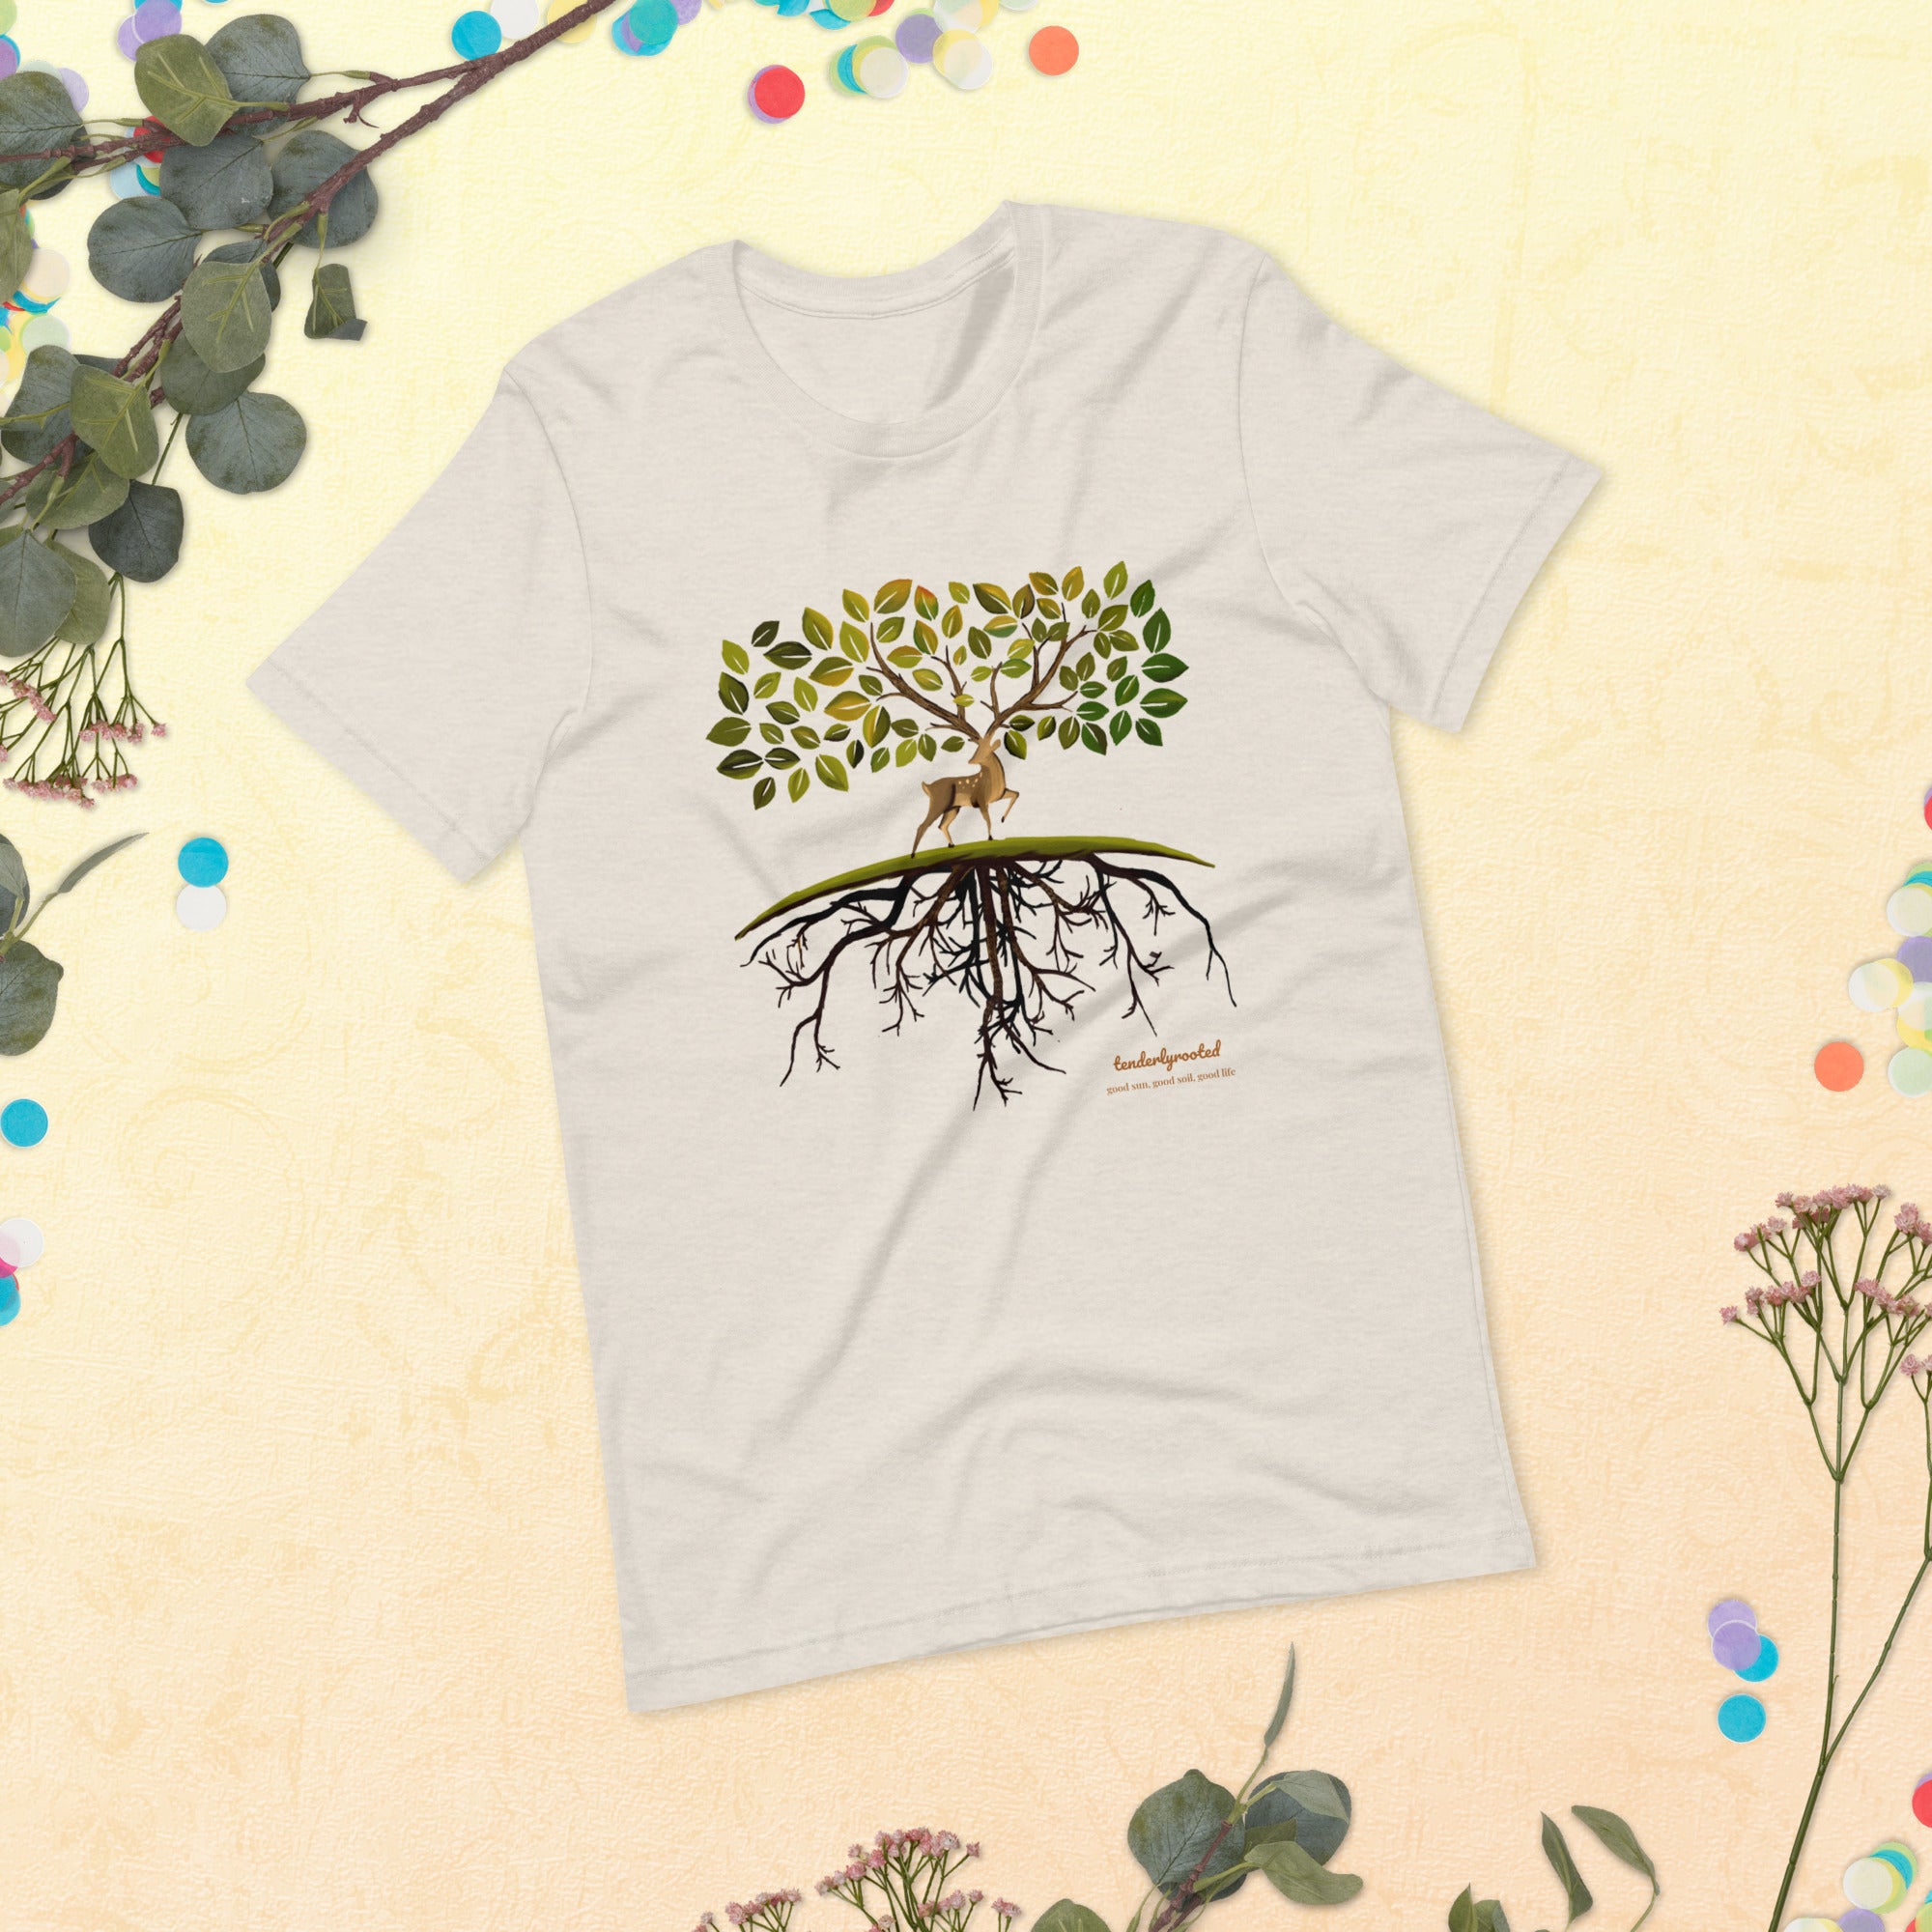 Deer Tree unisex t-shirt